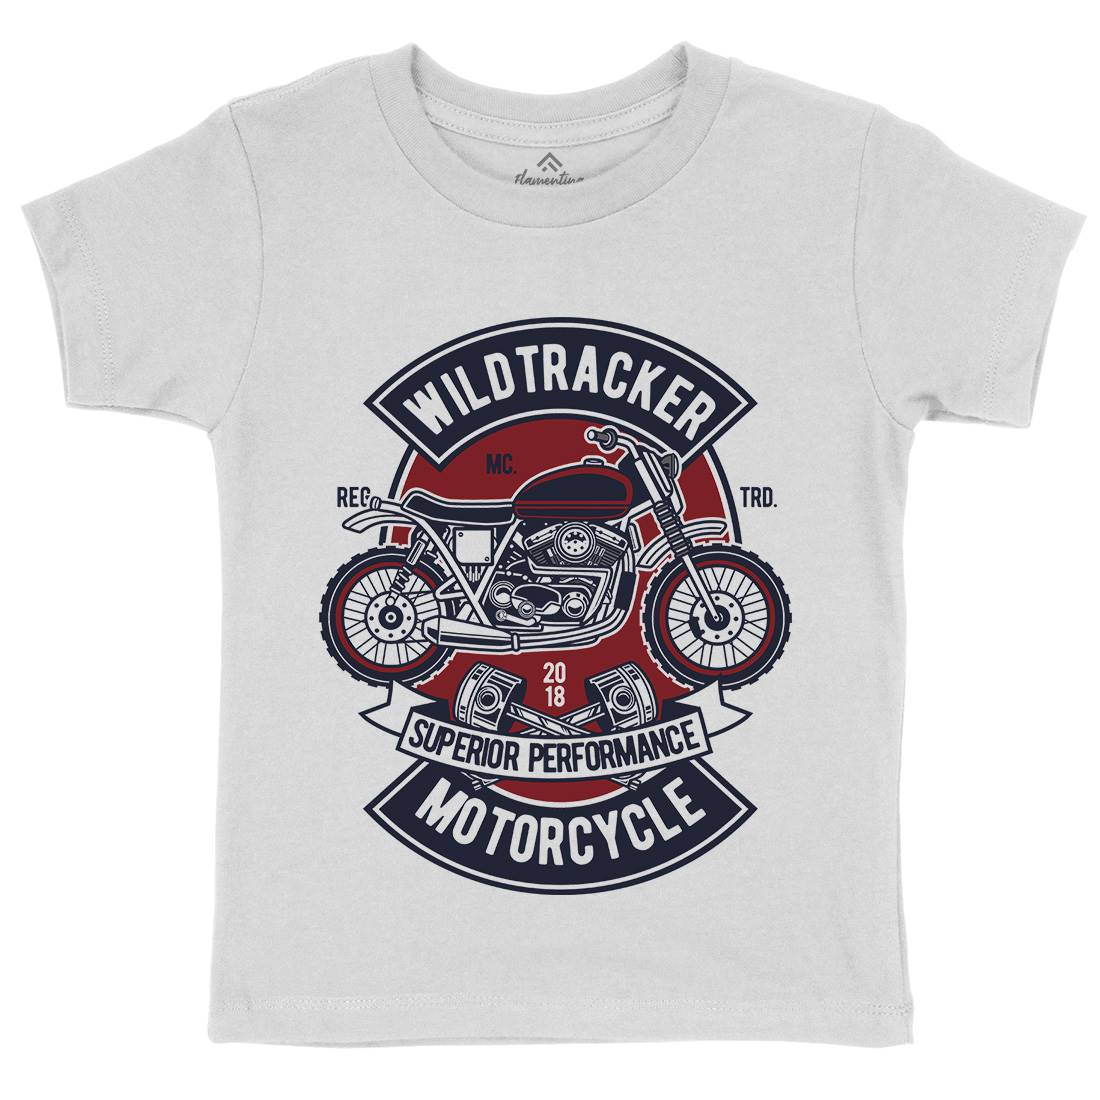 Wild Tracker Kids Crew Neck T-Shirt Motorcycles D598